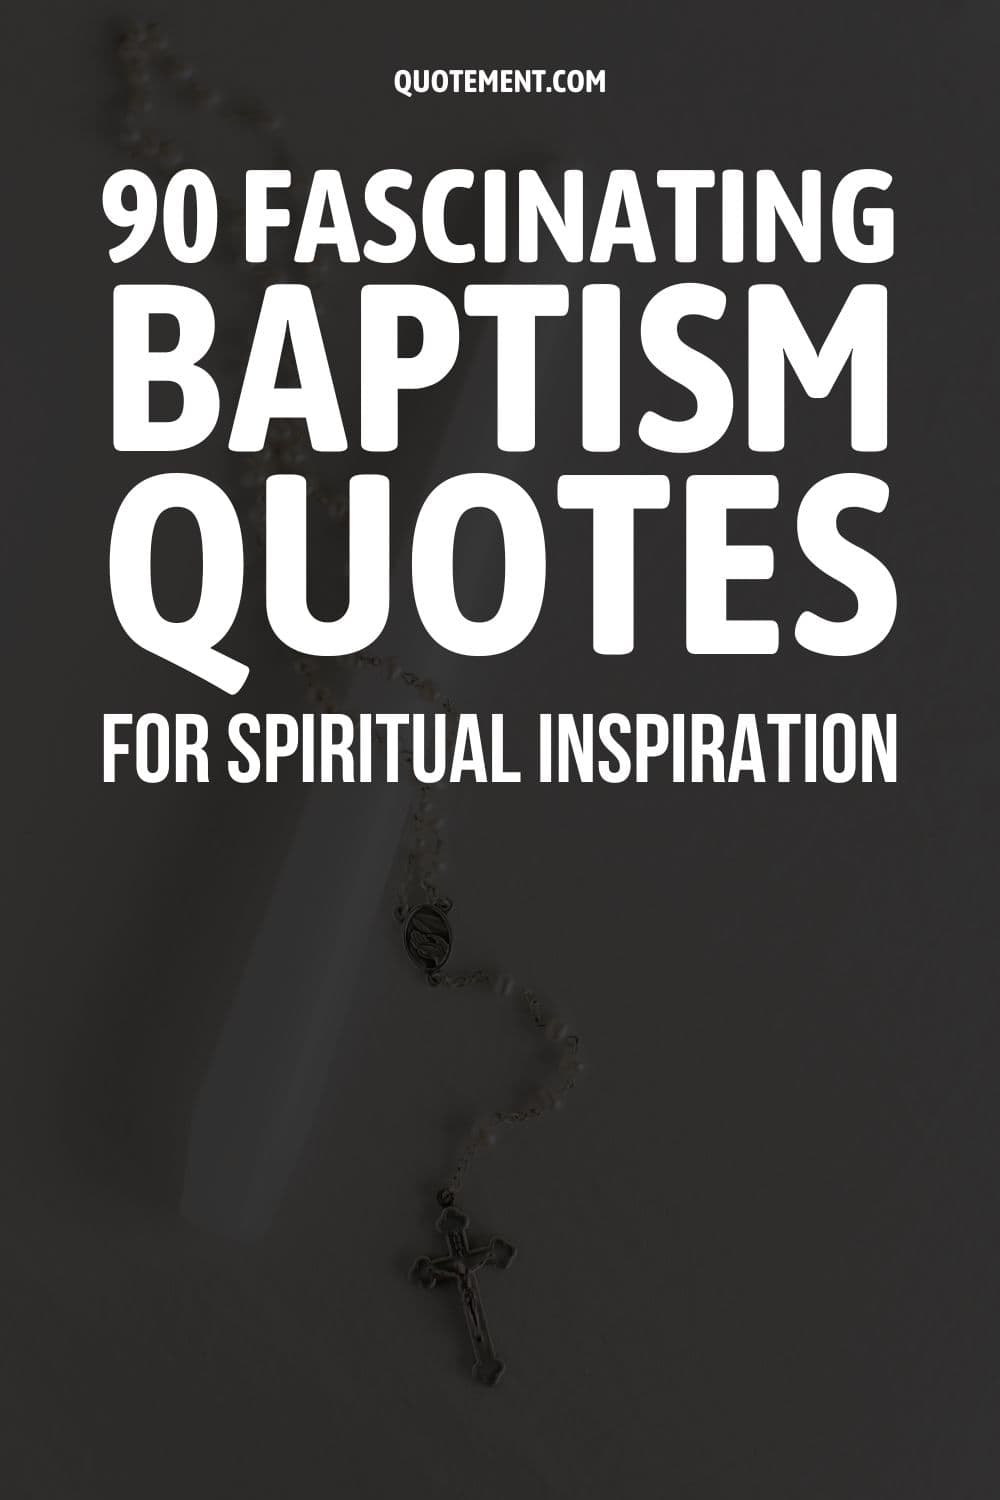 90 Fascinating Baptism Quotes For Spiritual Inspiration